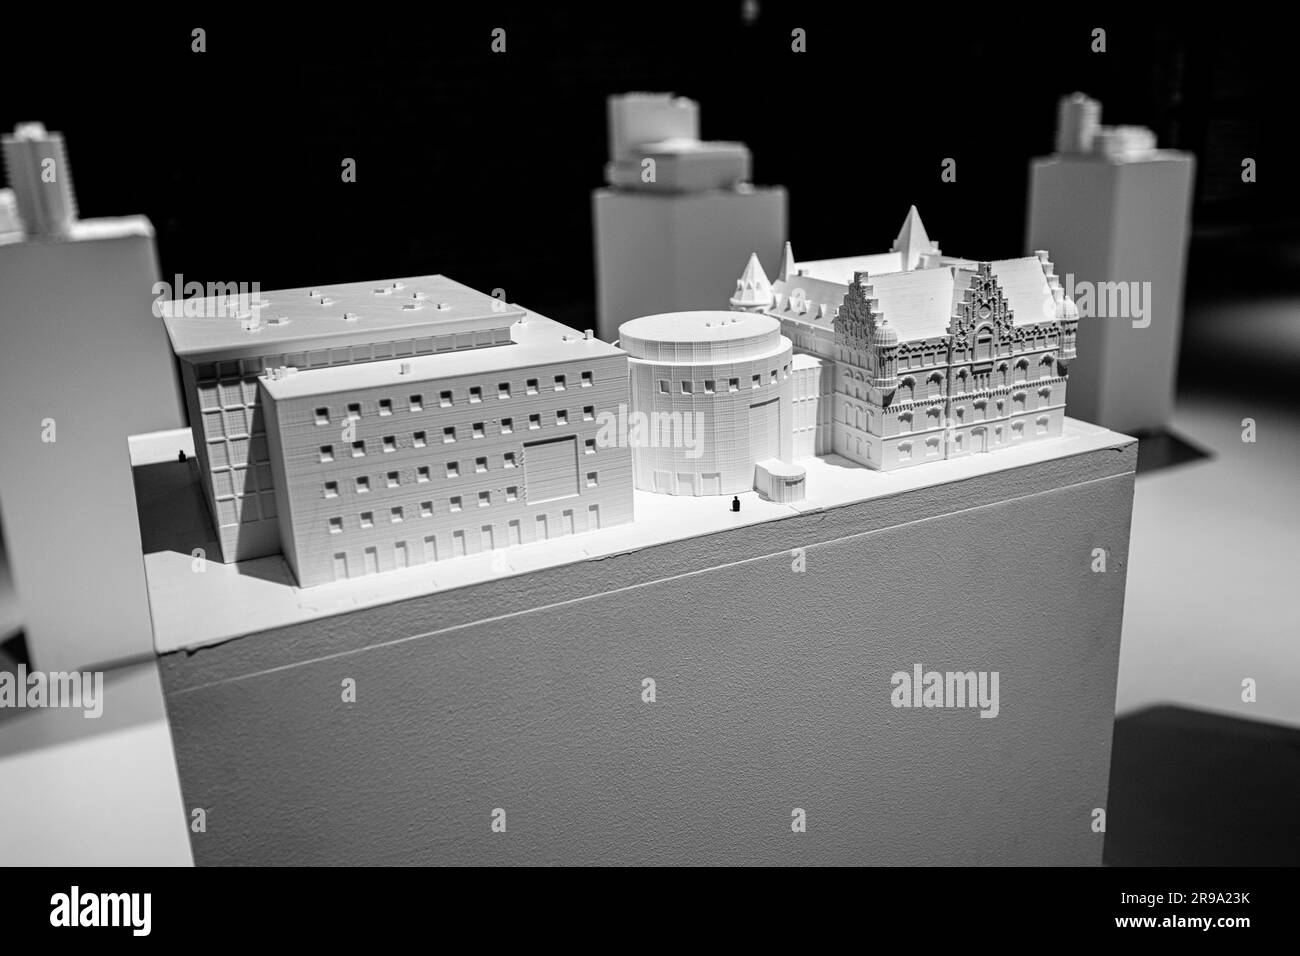 Malmö, Sweden - July 09 2022: Architectural model of Malmö Stadsbibliotek on display Stock Photo